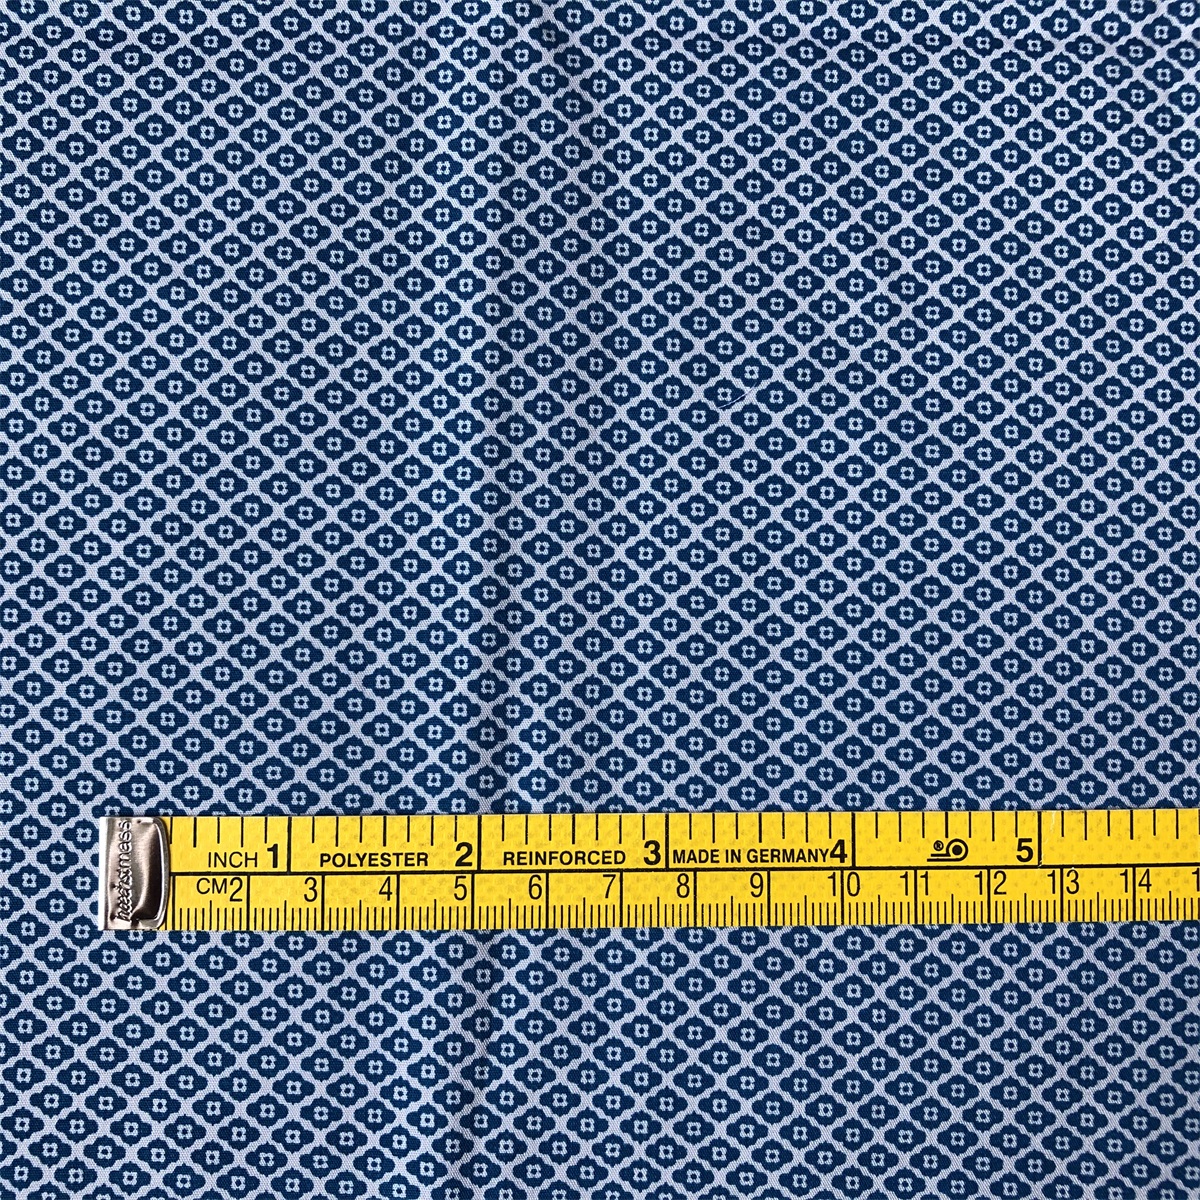 Sun-rising Textile Cotton fabric 50S compact yarn soft for men's shirts 100% cotton poplin printed shirts woven fabric